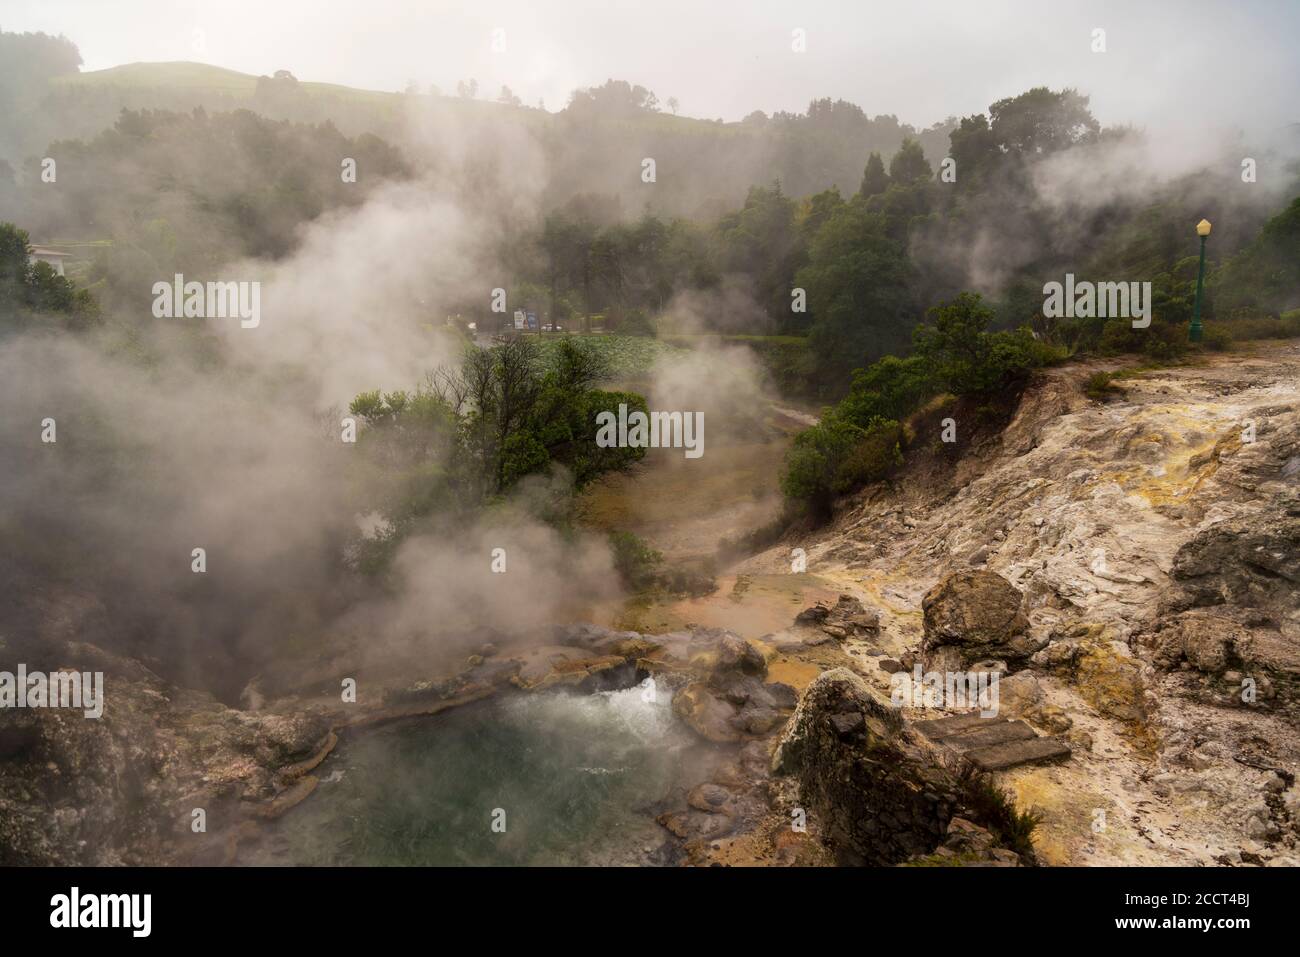 Hot Thermal Springs In Furnas Village Sao Miguel Island Azores Portugal Caldeira Do Asmodeu